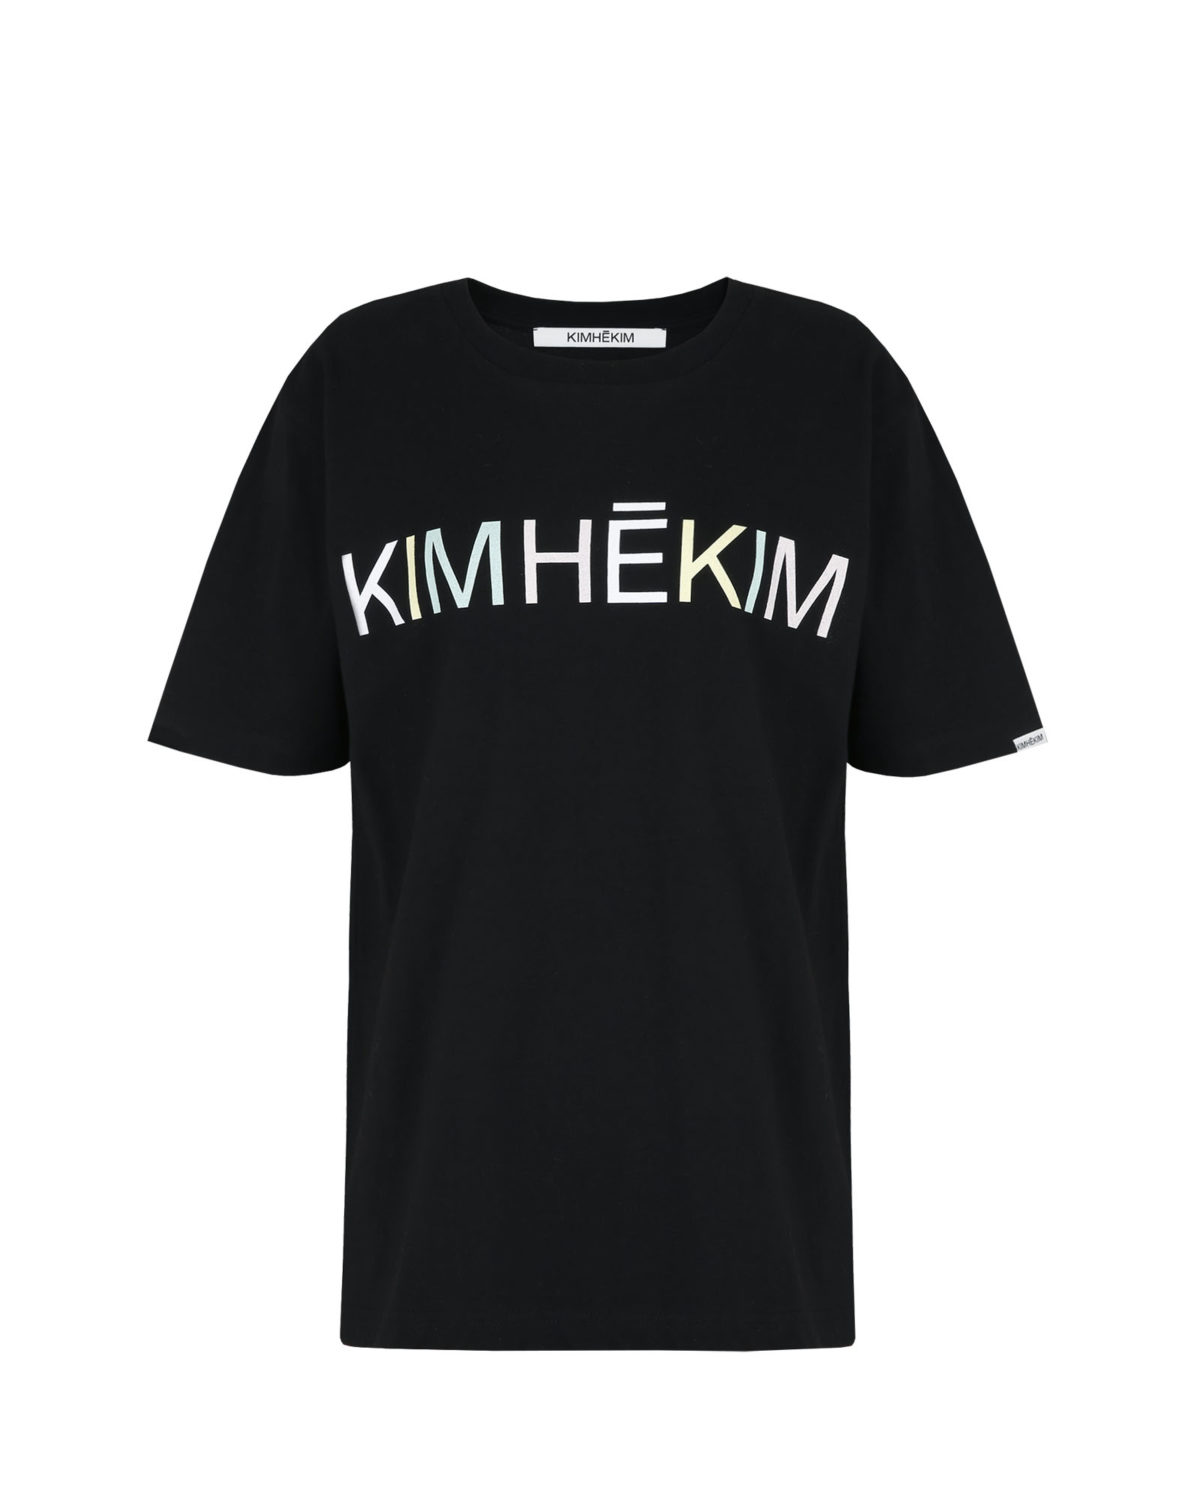 Rainbow Kimhekim T-shirt